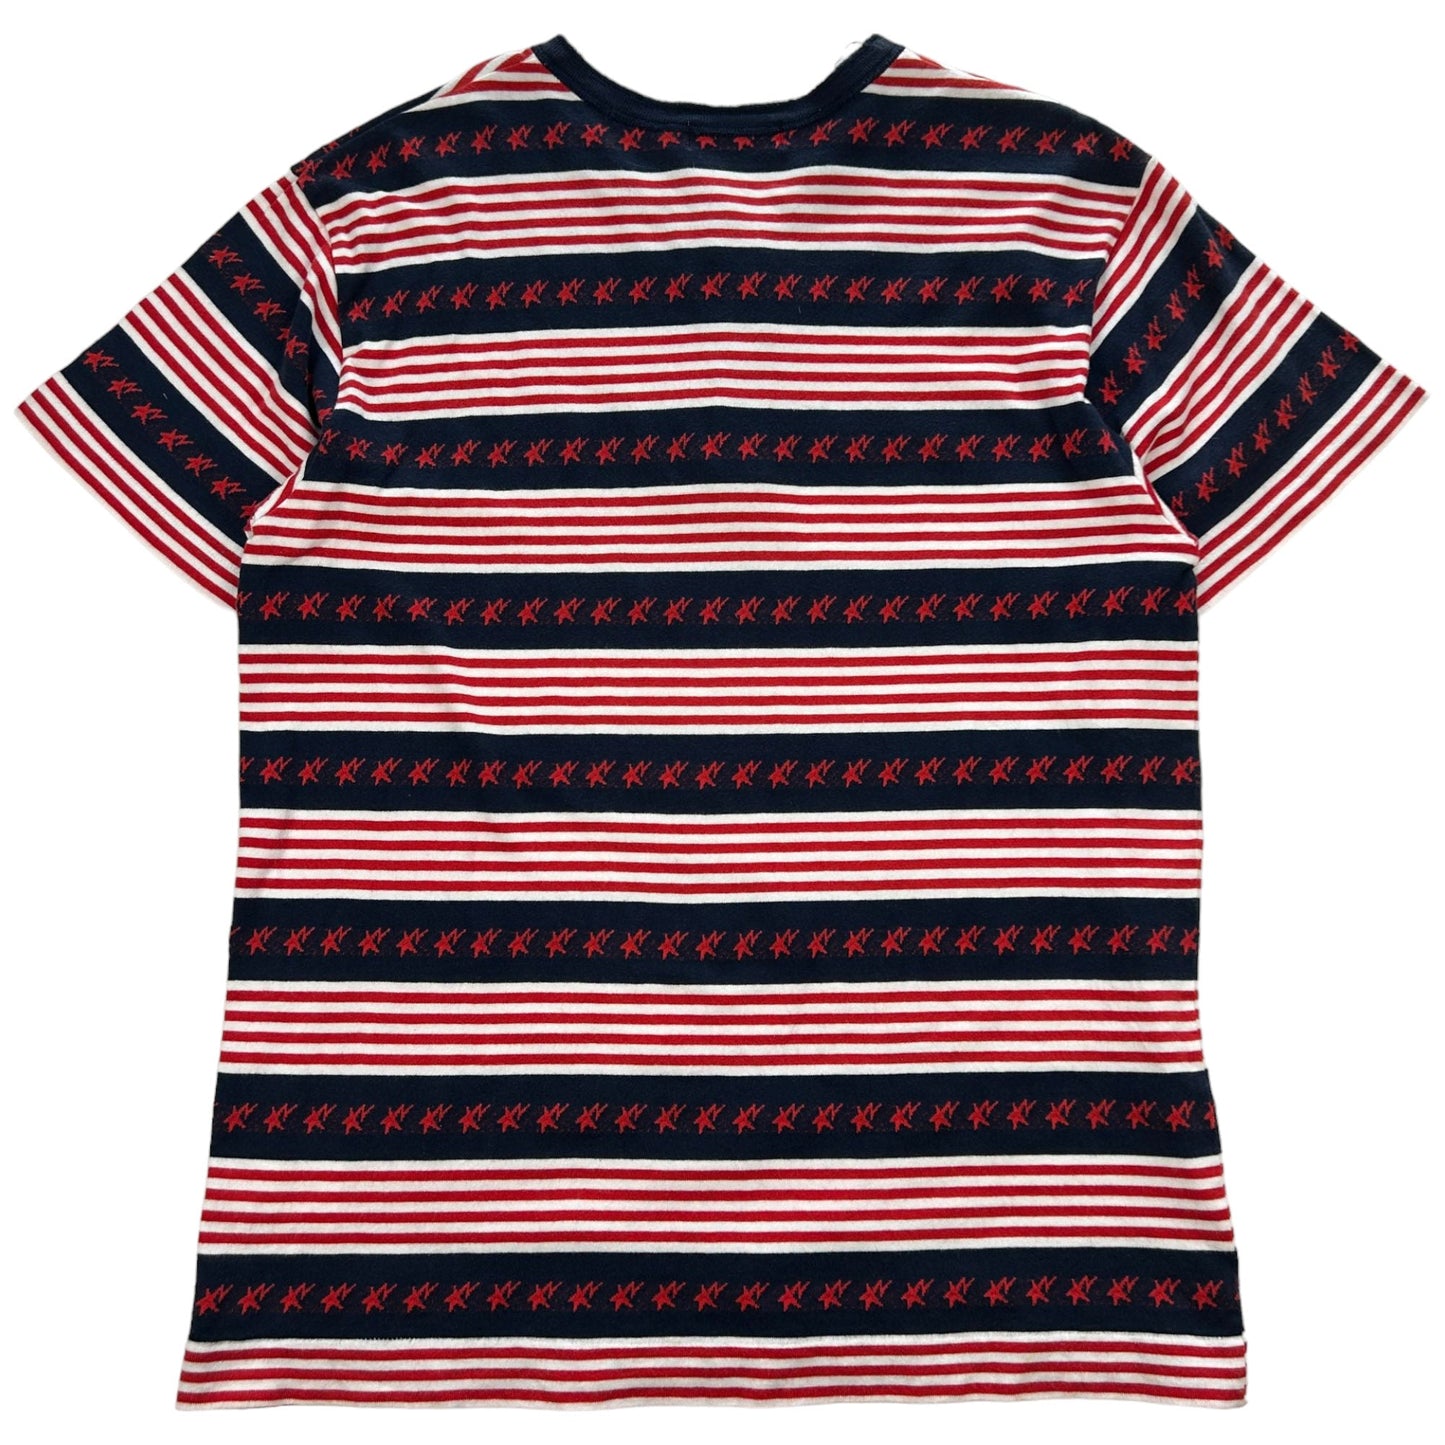 Vintage Bape Striped T Shirt Size L